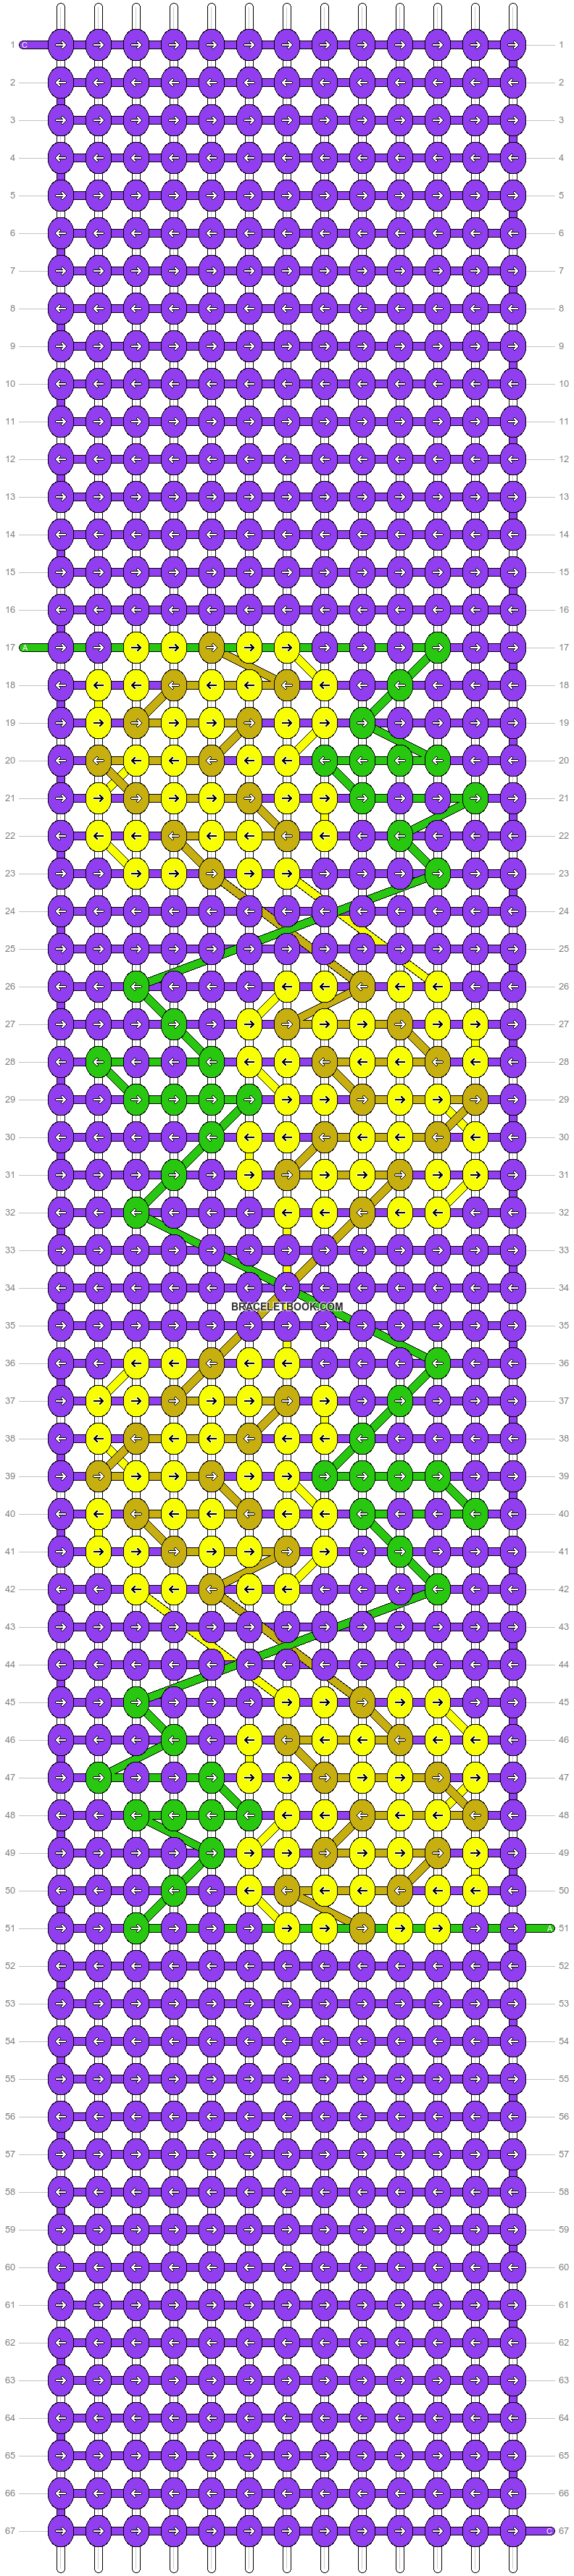 Alpha pattern #41506 variation #55015 pattern